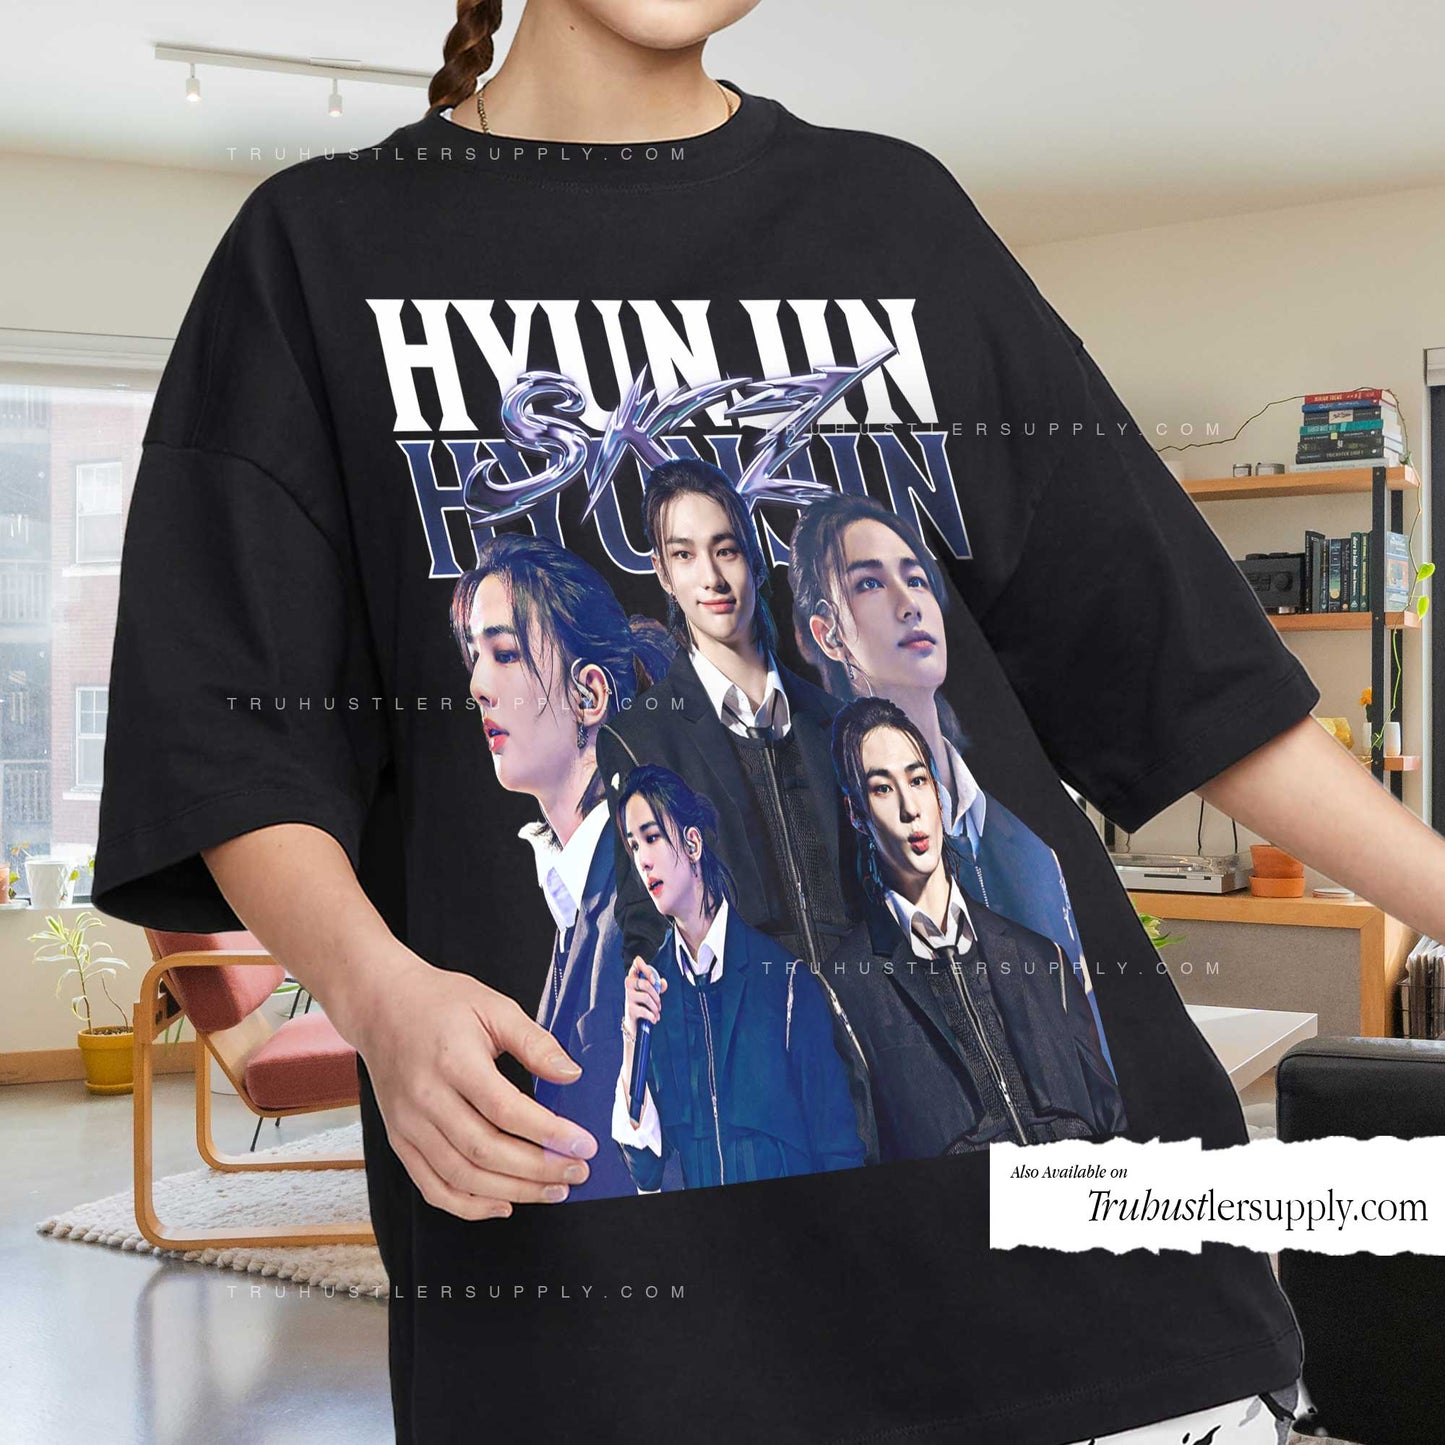 Hyunjin SKZ Bootleg Graphic T-Shirt